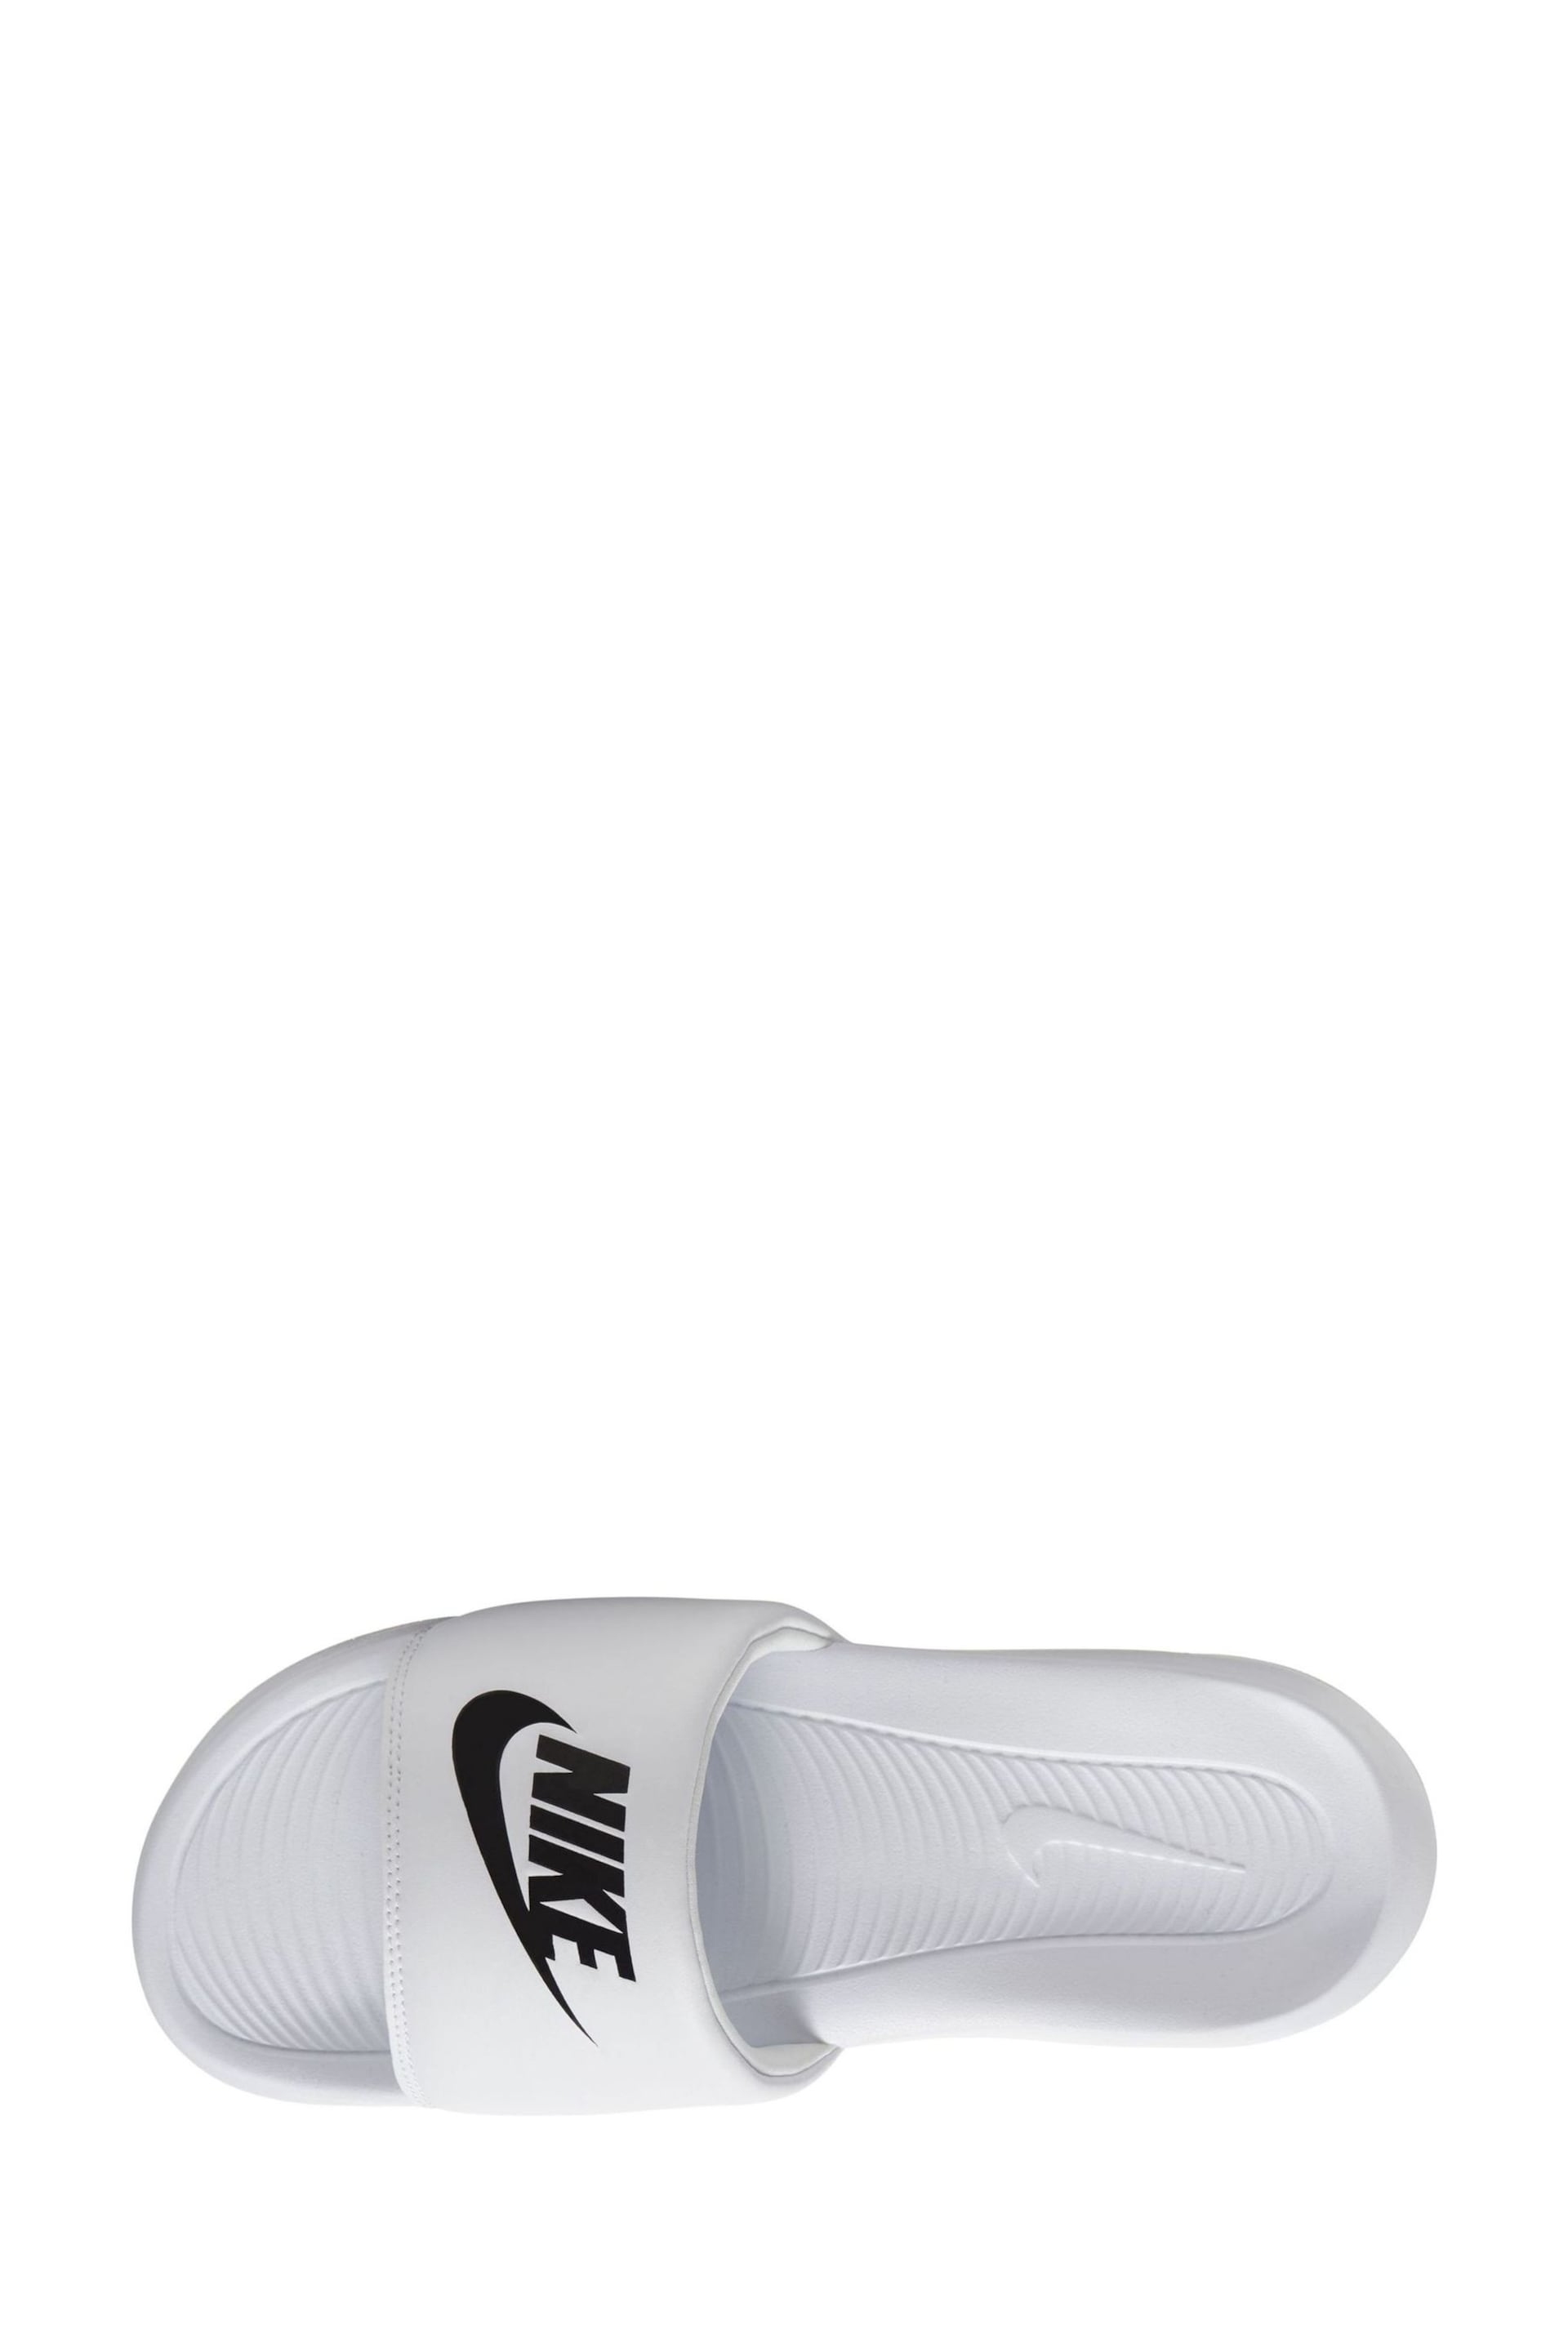 Nike White/Black Victori One Sliders - Image 7 of 8